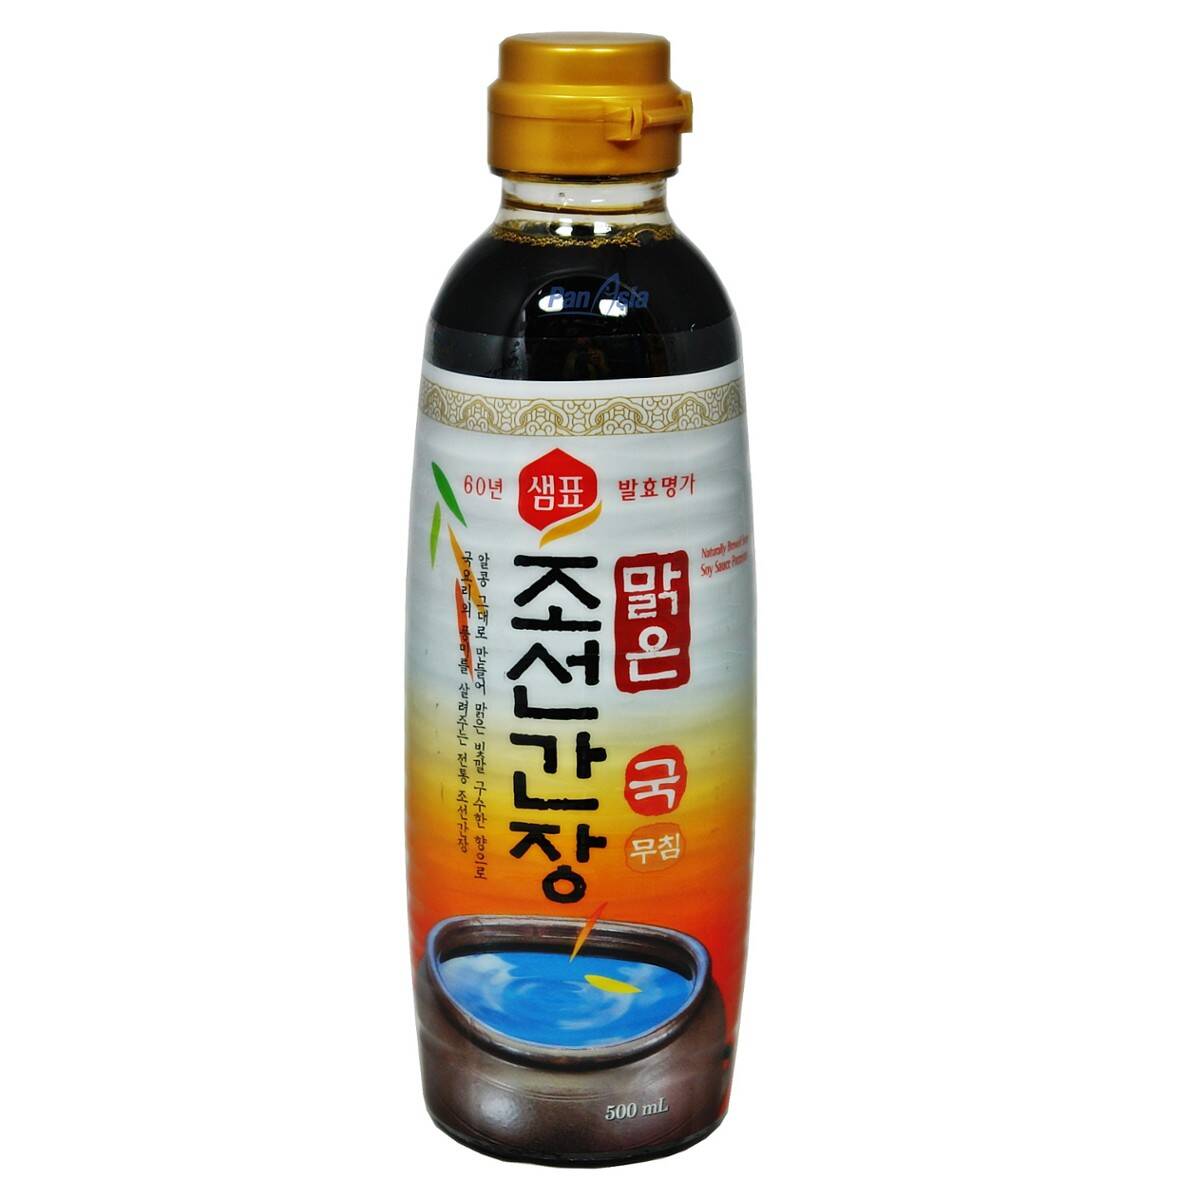 Soy sauce for soup 500ml Sempio 국간장